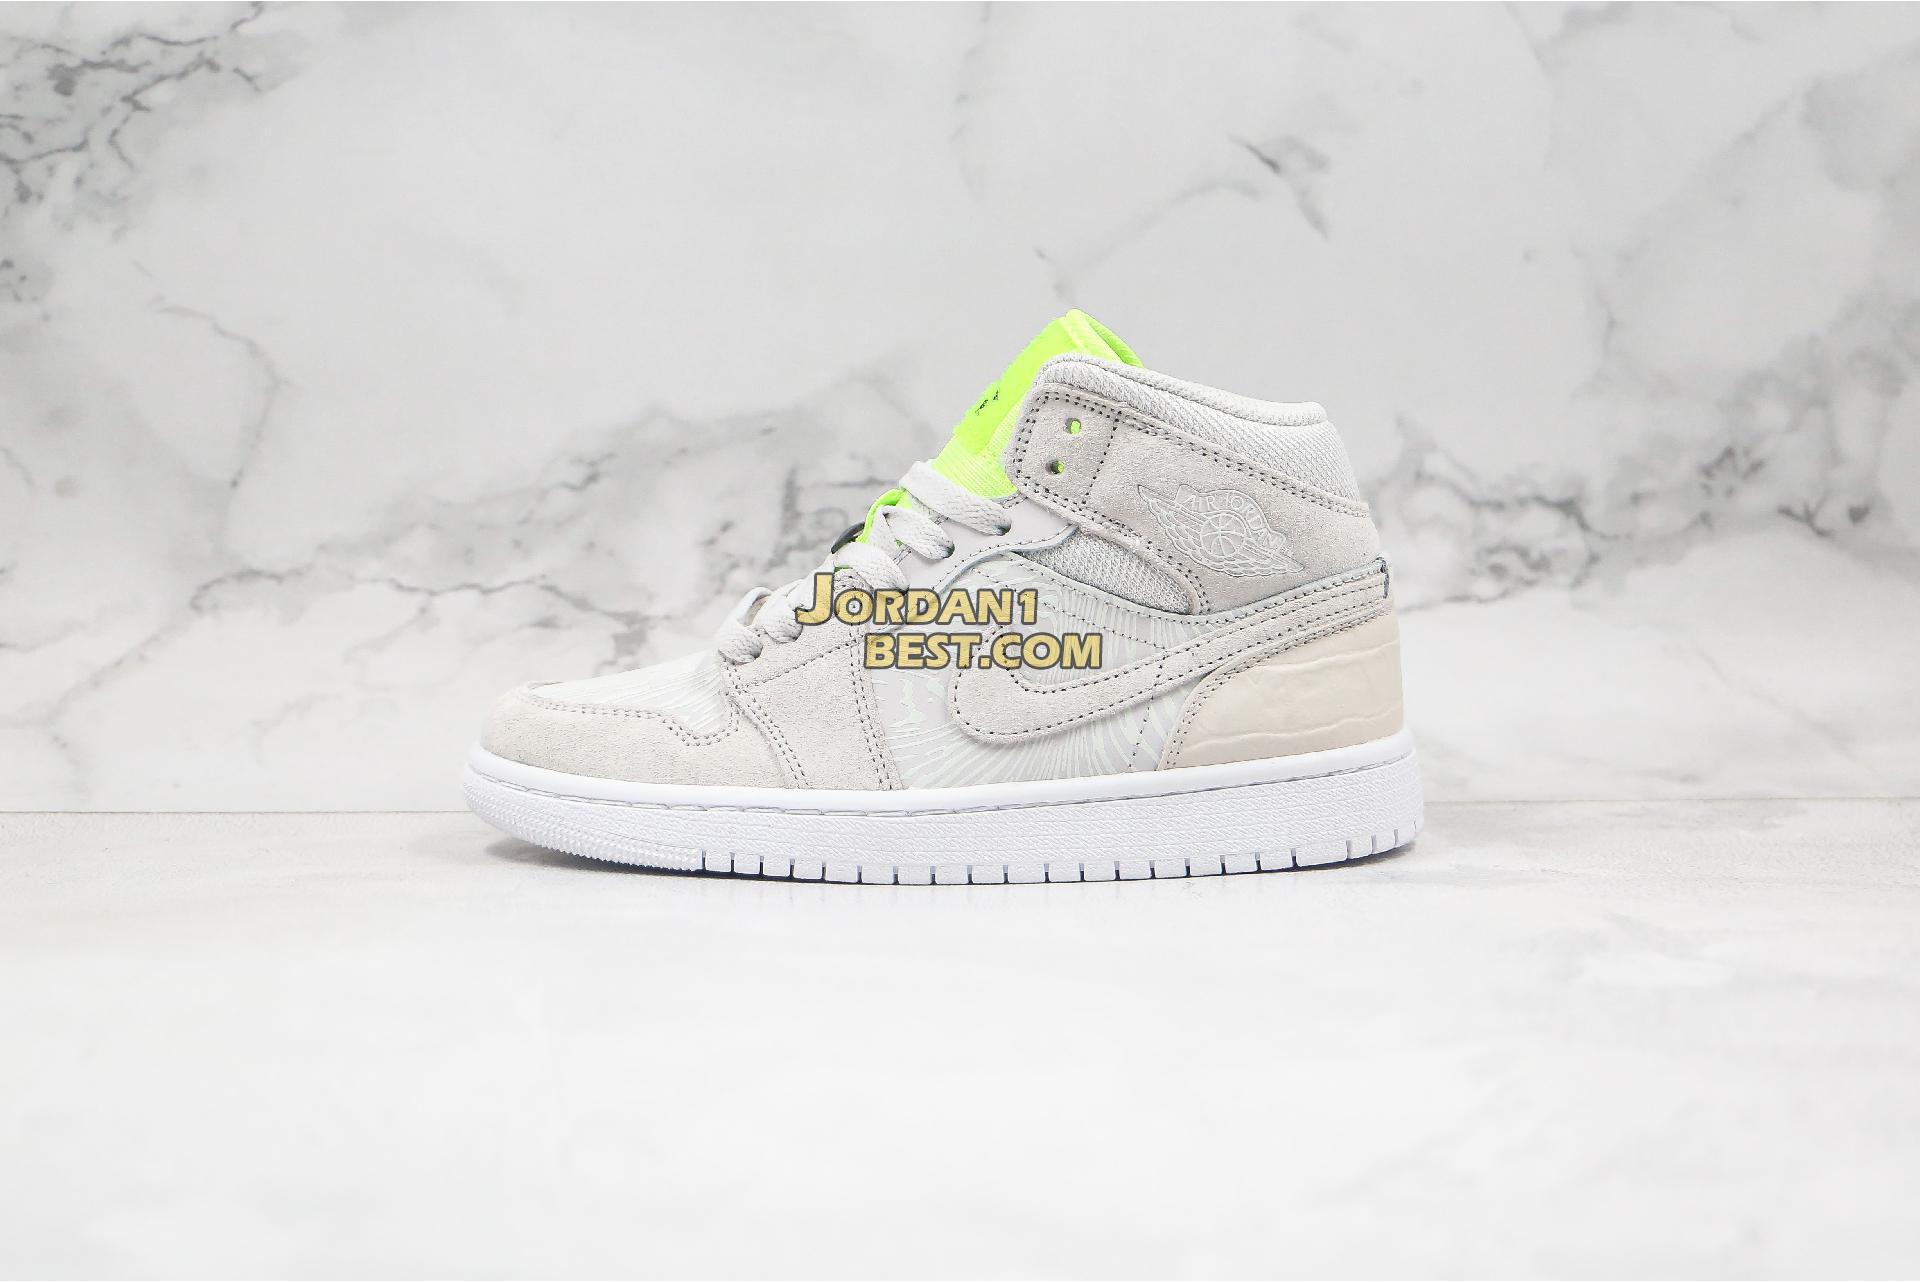 best replicas Air Jordan 1 Mid "Ghost Green" CV3018-001 Mens Womens vast grey/ghost green-white Shoes replicas On Wholesale Sale Online